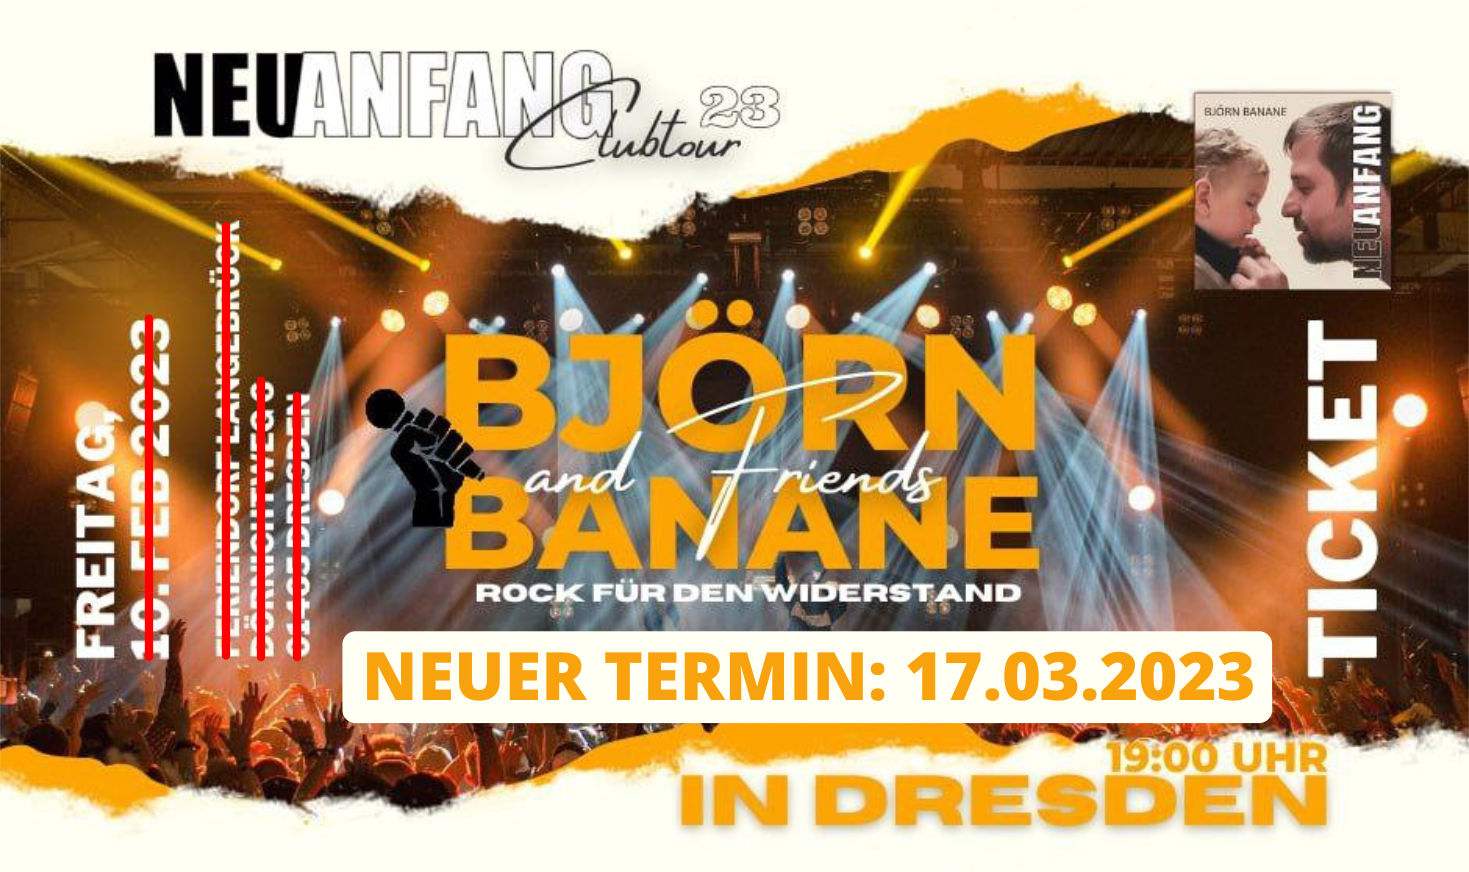 Björn Banane am 17.03.2023 in Dresden